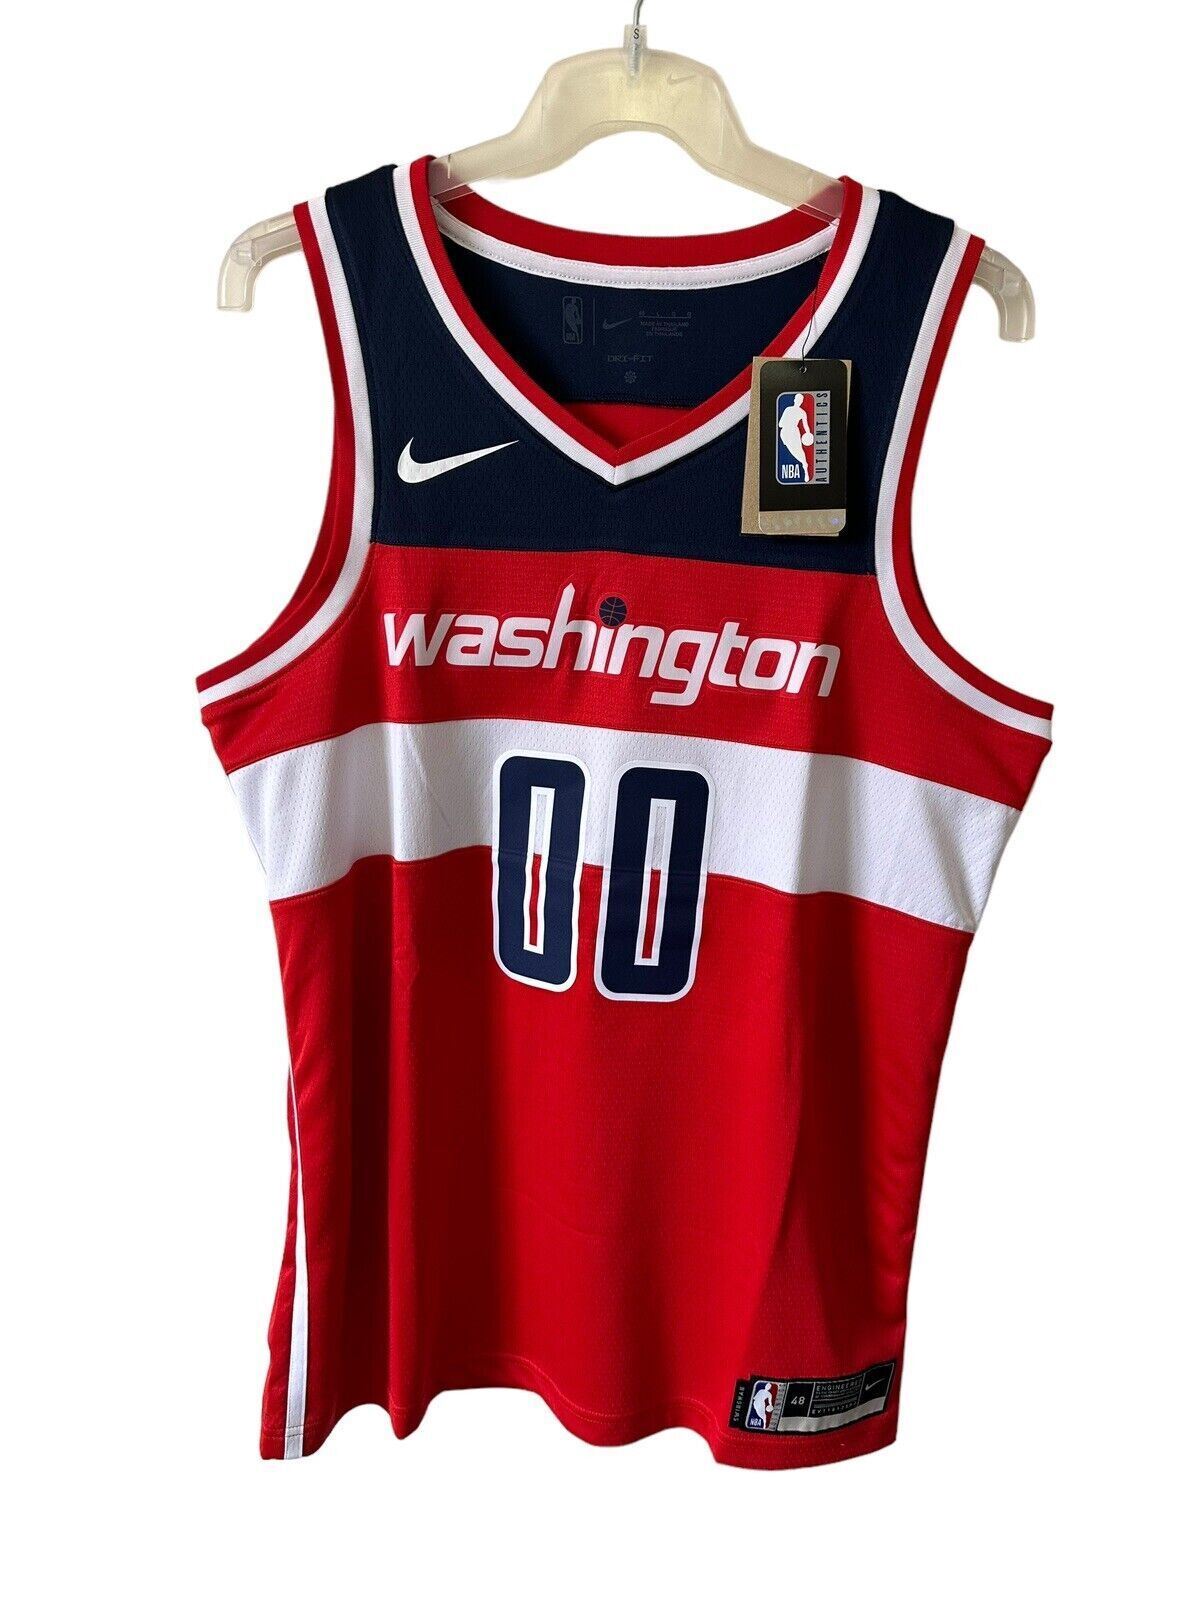 Nike NBA Washington Wizards Swingman Jersey SANTI 00 Basketball Mens Large